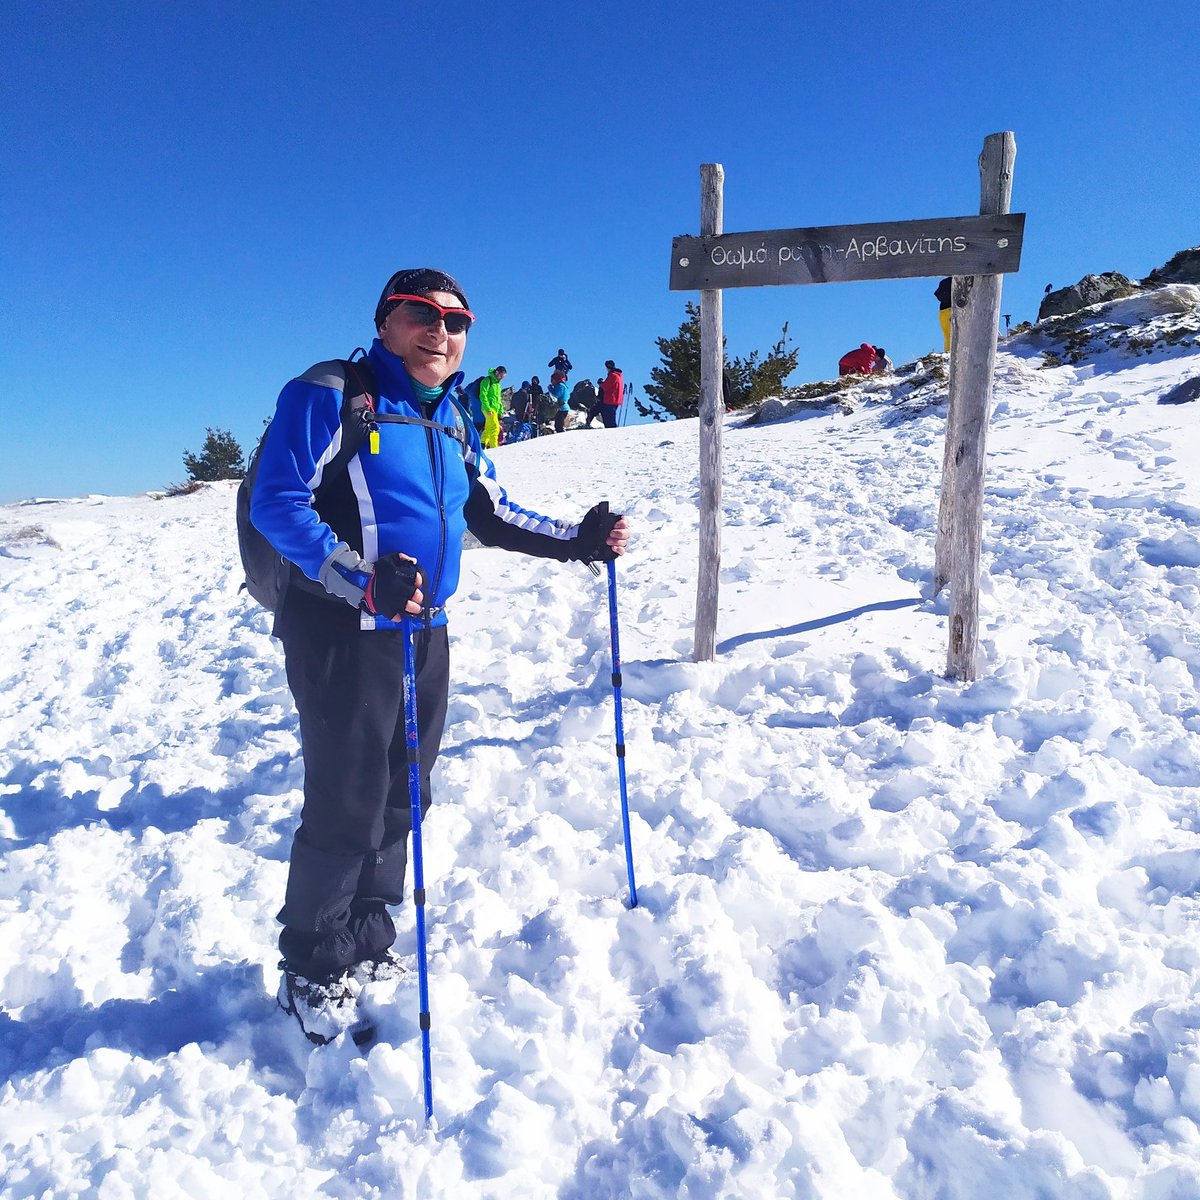 #traceyoureco #neverstopexploring #hikingadventures #hiking #snow #OLYMPUS #Smile #friends #activities #outdoors #trekking #mountain #verymacedonia #katerini #Greece